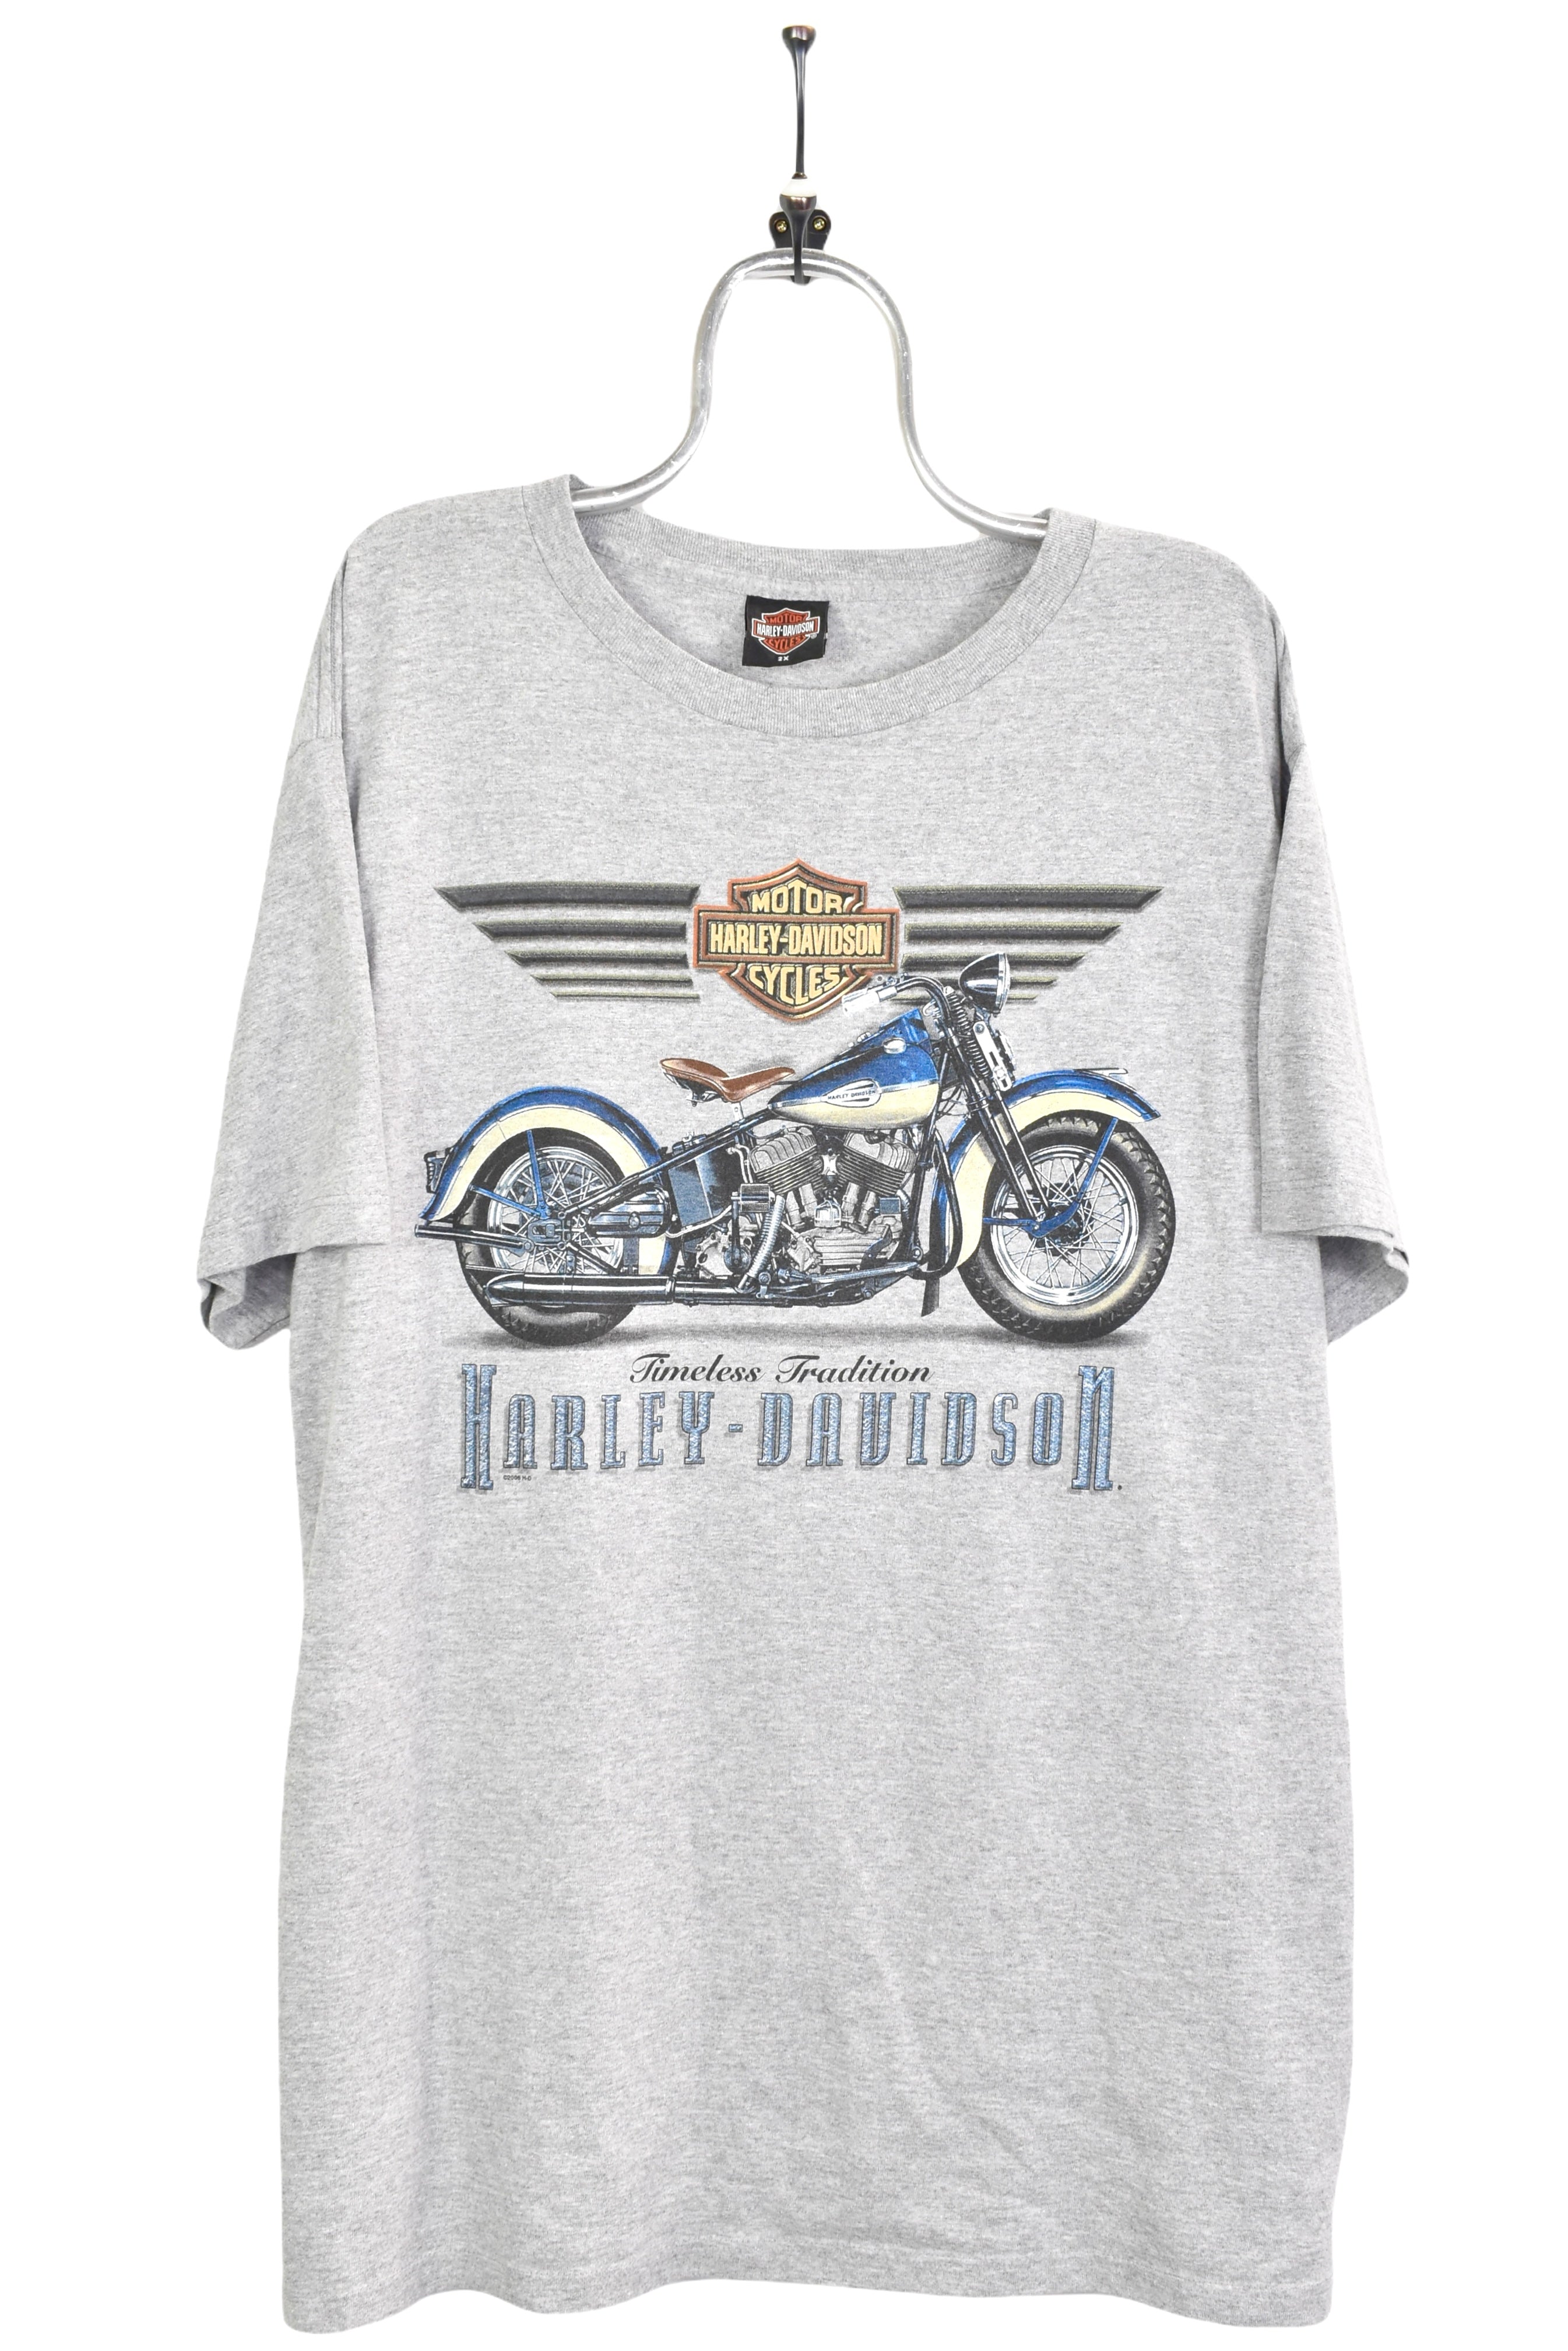 Vintage Harley Davidson grey t-shirt | XXL HARLEY DAVIDSON